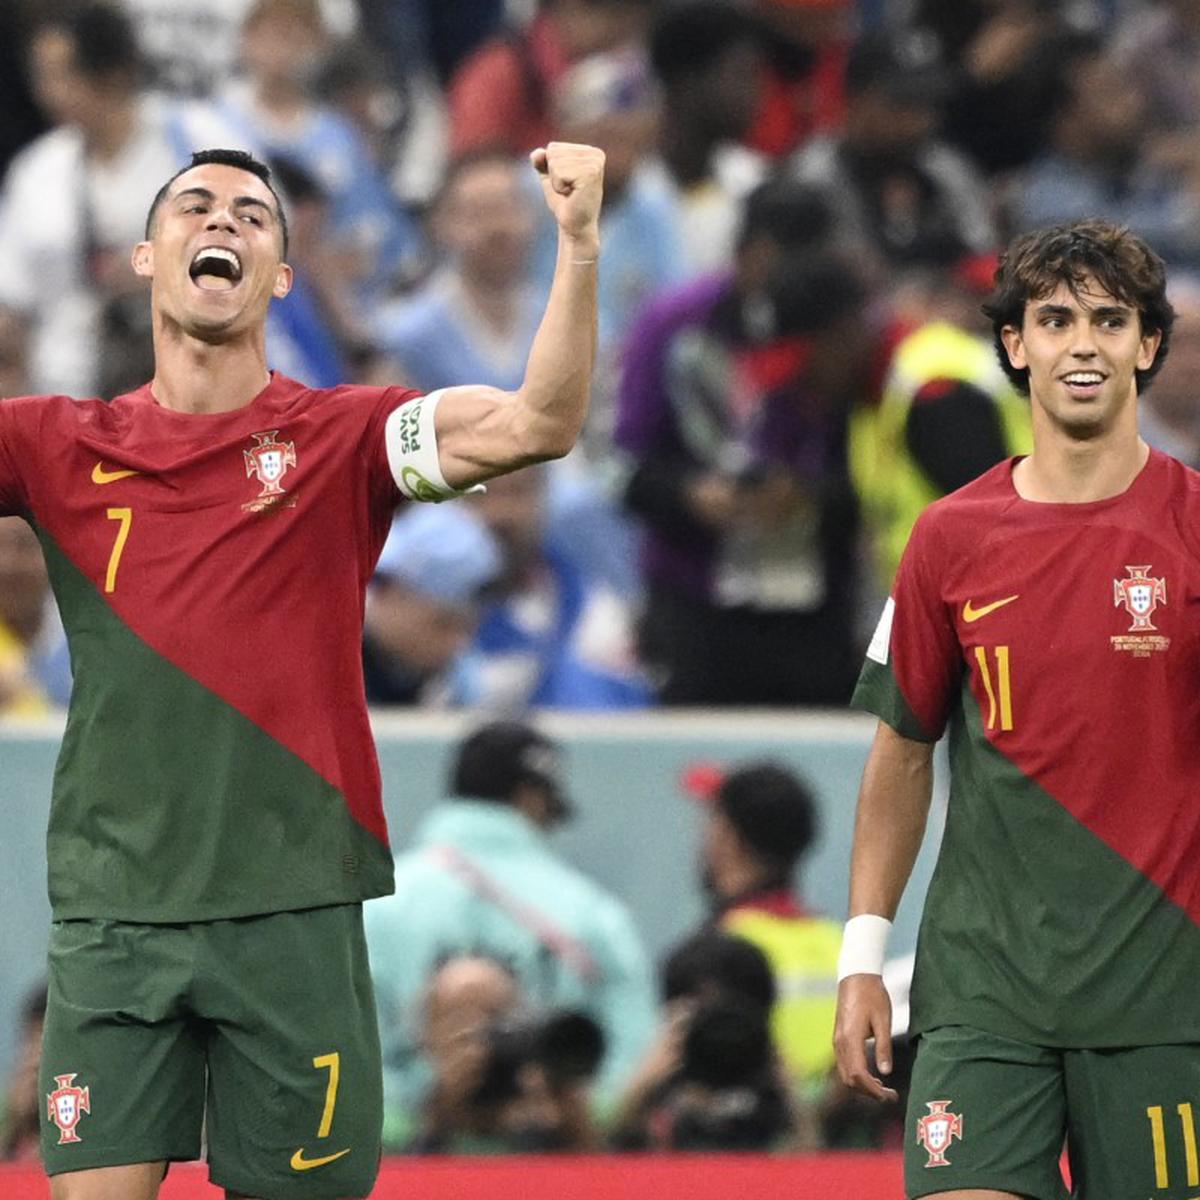 Ver gratis Portugal vs Uruguay EN VIVO